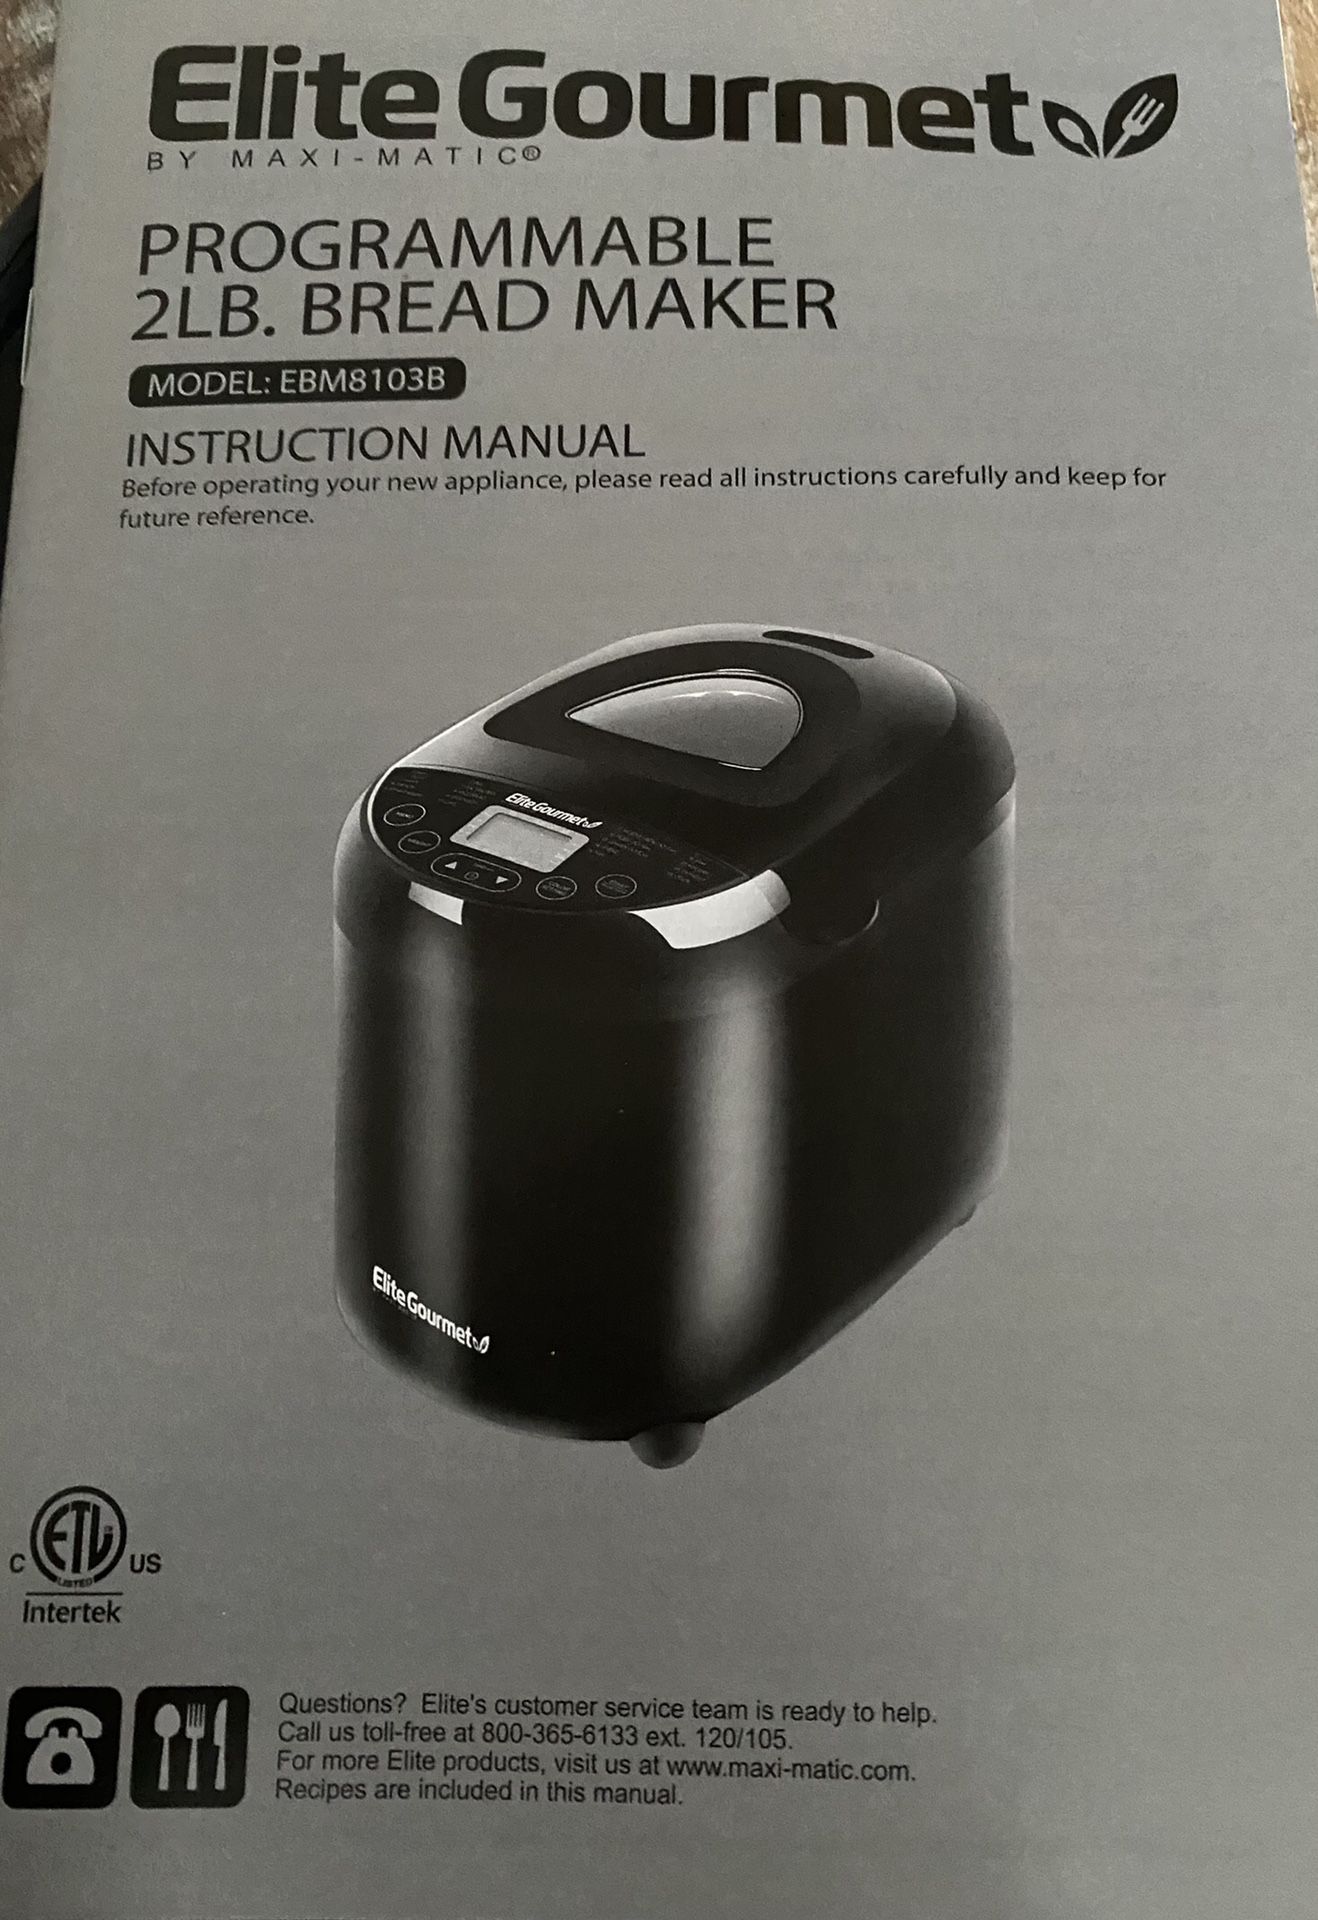 Elite Gourmet 2lb Programmable Bread Maker